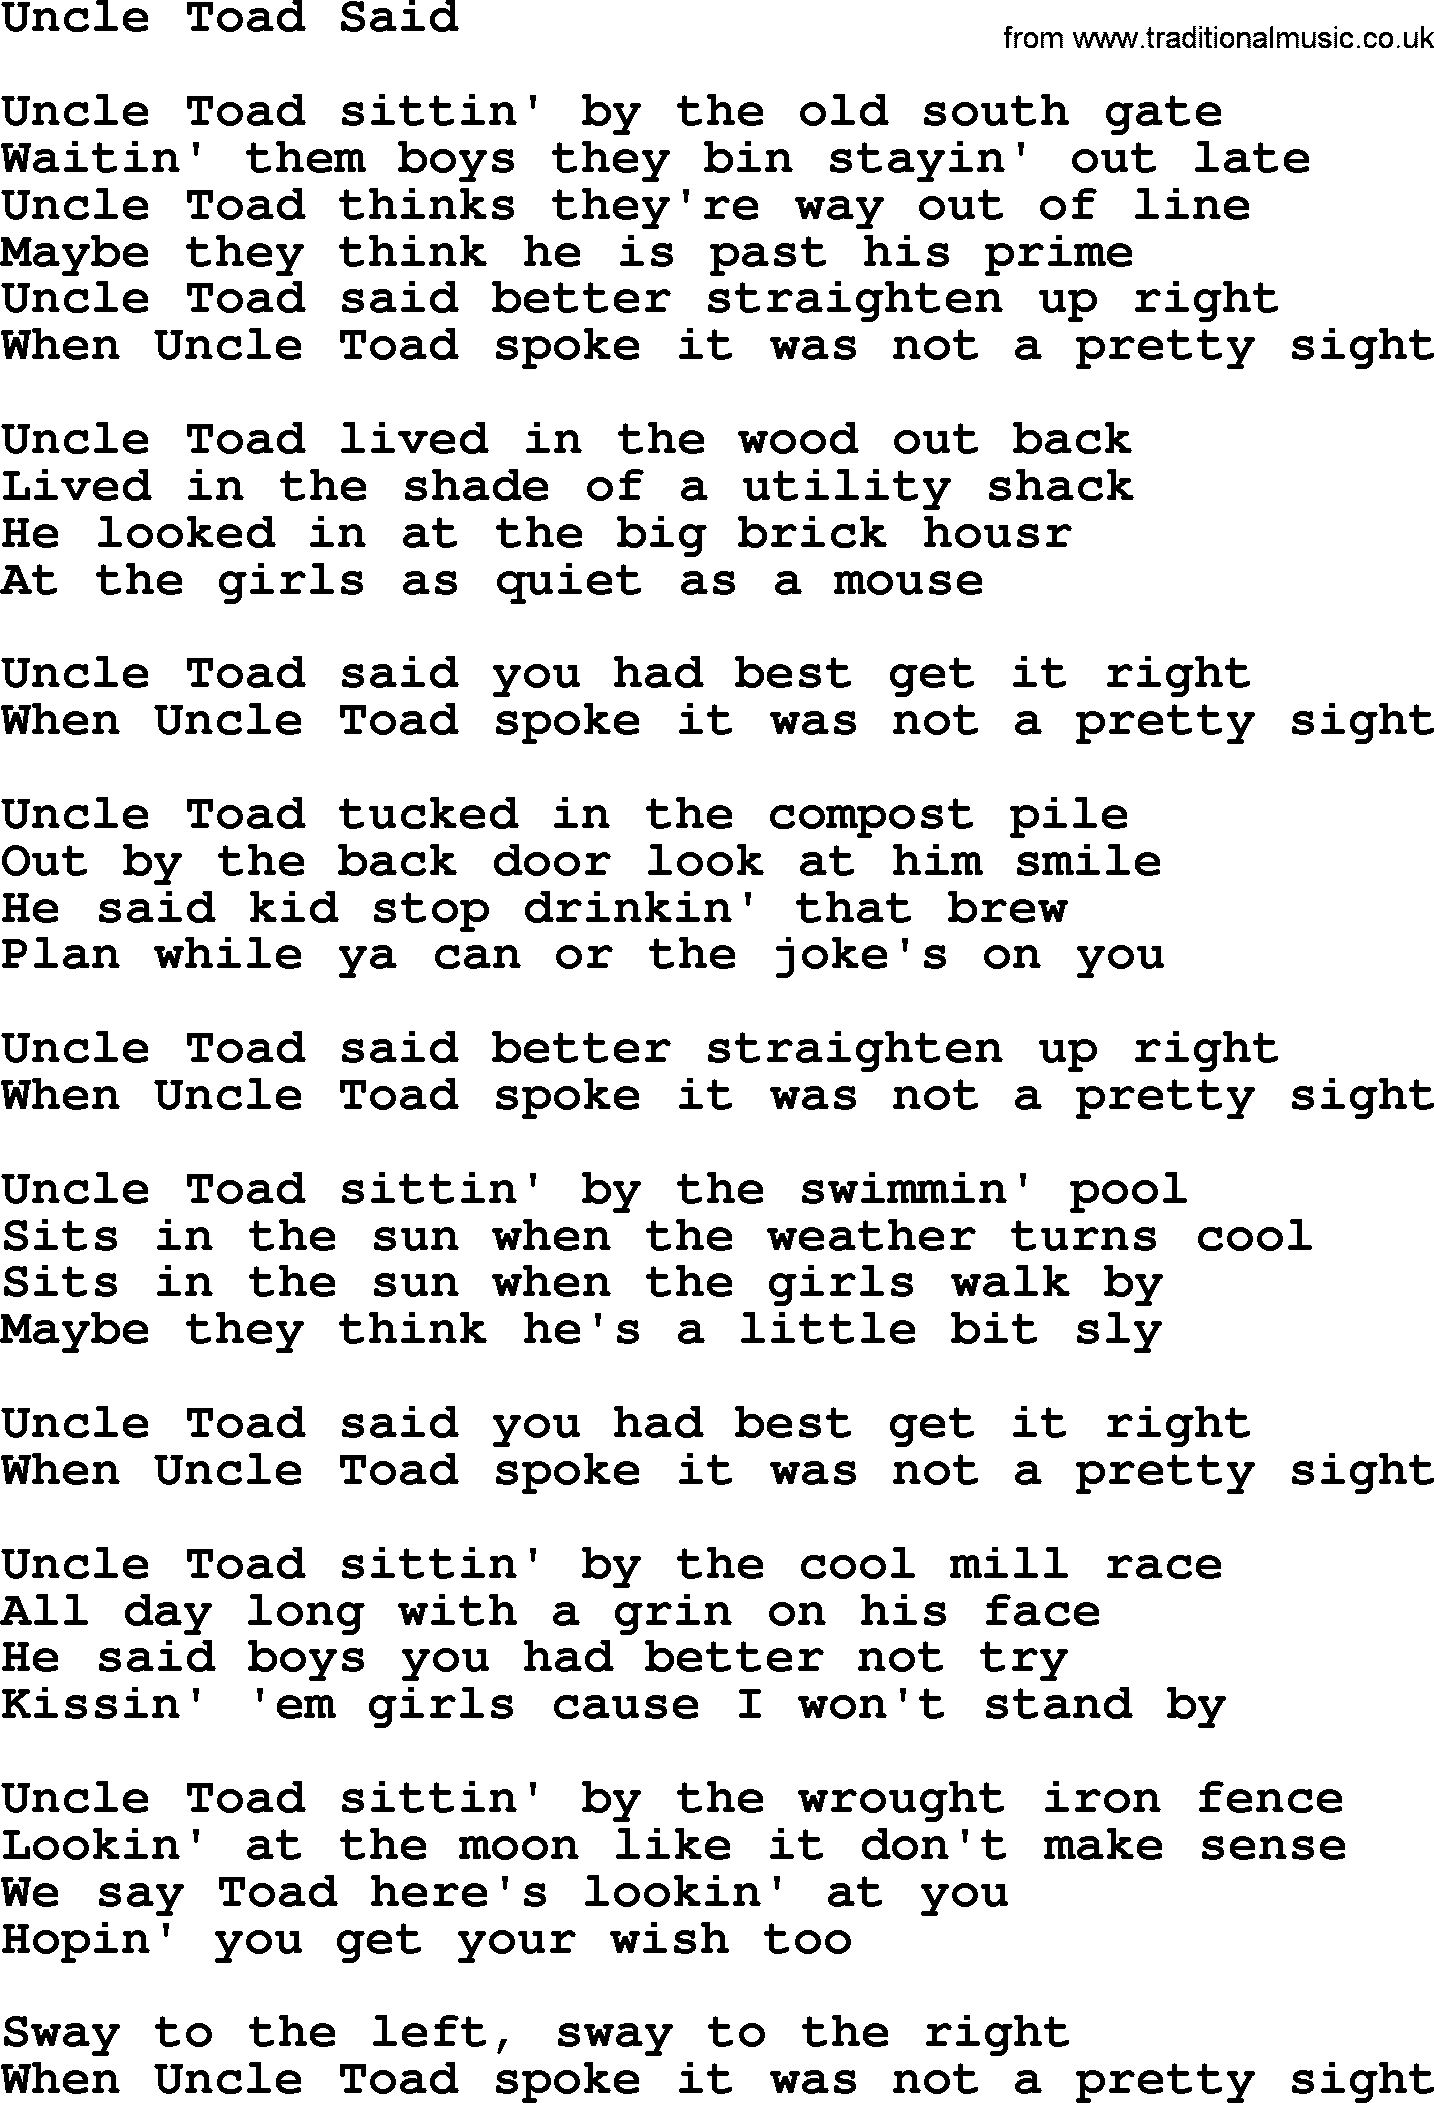 Gordon Lightfoot song Uncle Toad Said, lyrics